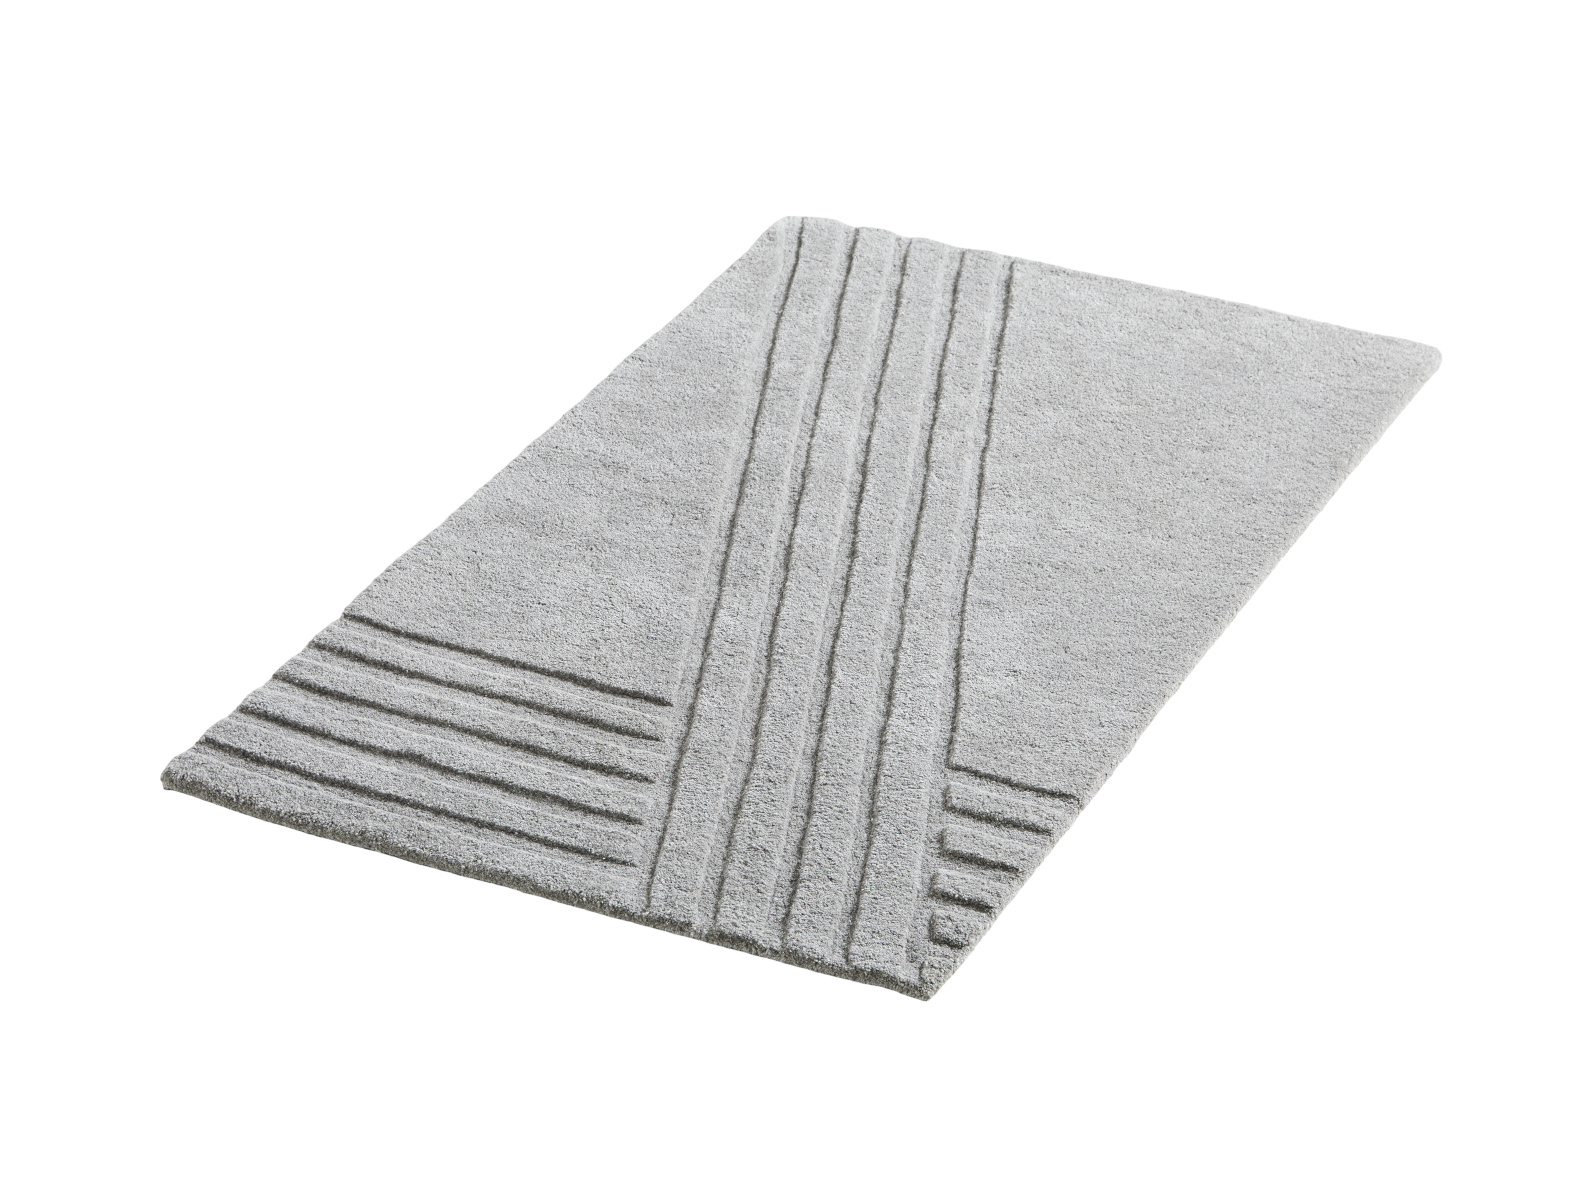 Kyoto Teppich, 210 x 340 cm, grey